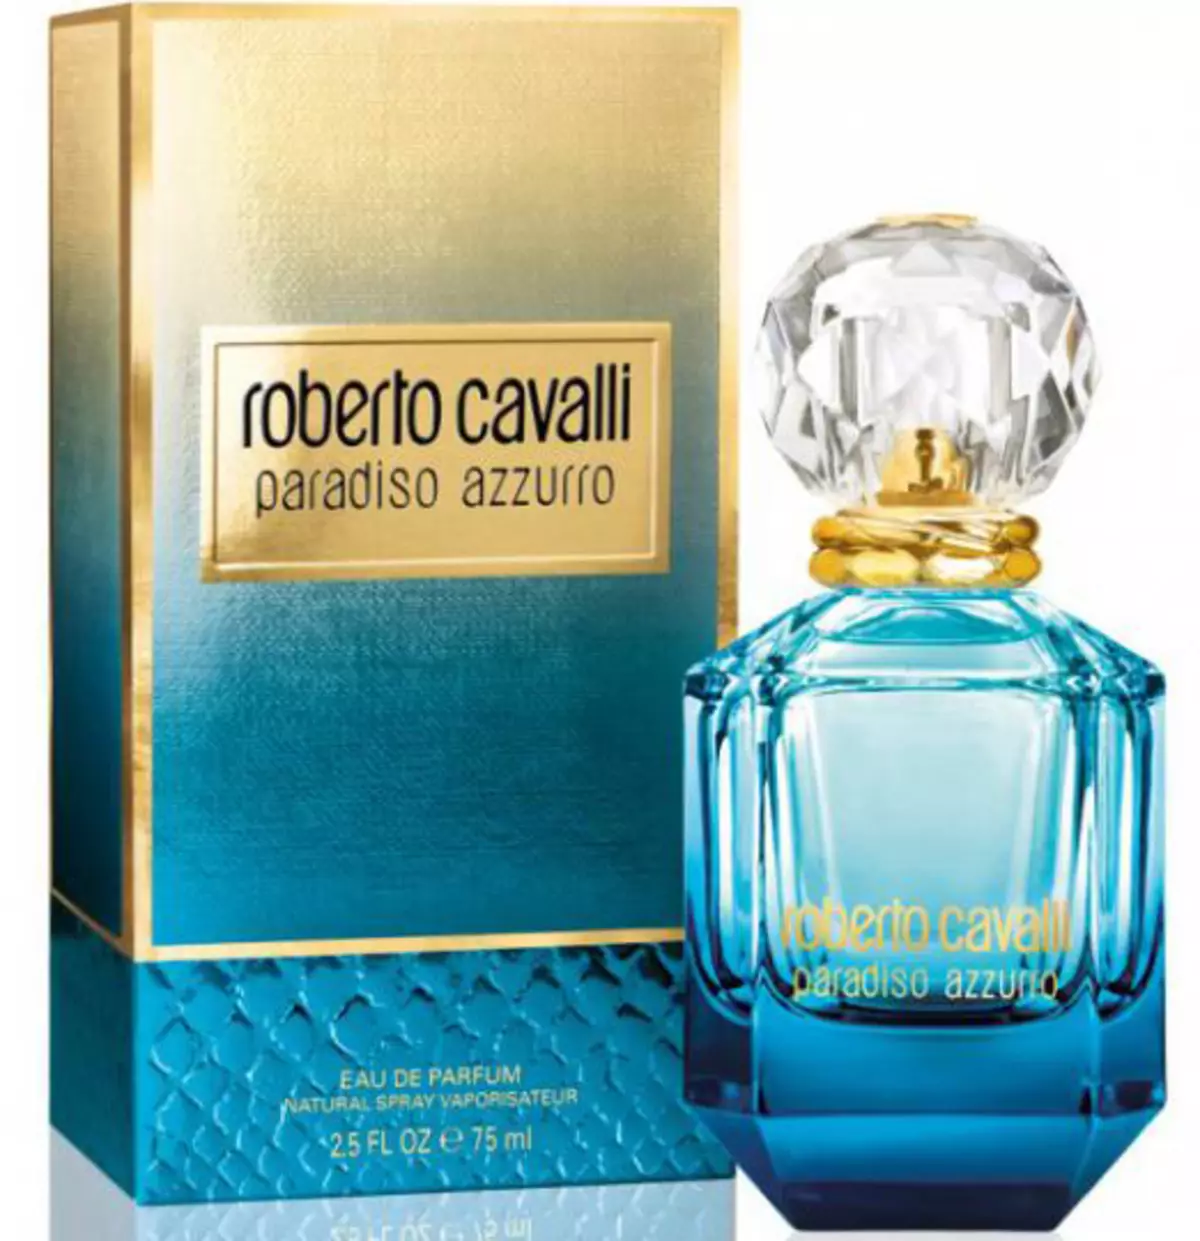 Perfume Roberto Cavalli: Perfume feminino, Just Cavalli e outro Toilette Auga, Aromas Roberto Cavalli Eau de Parfum, Paradiso e Acqua 25296_14